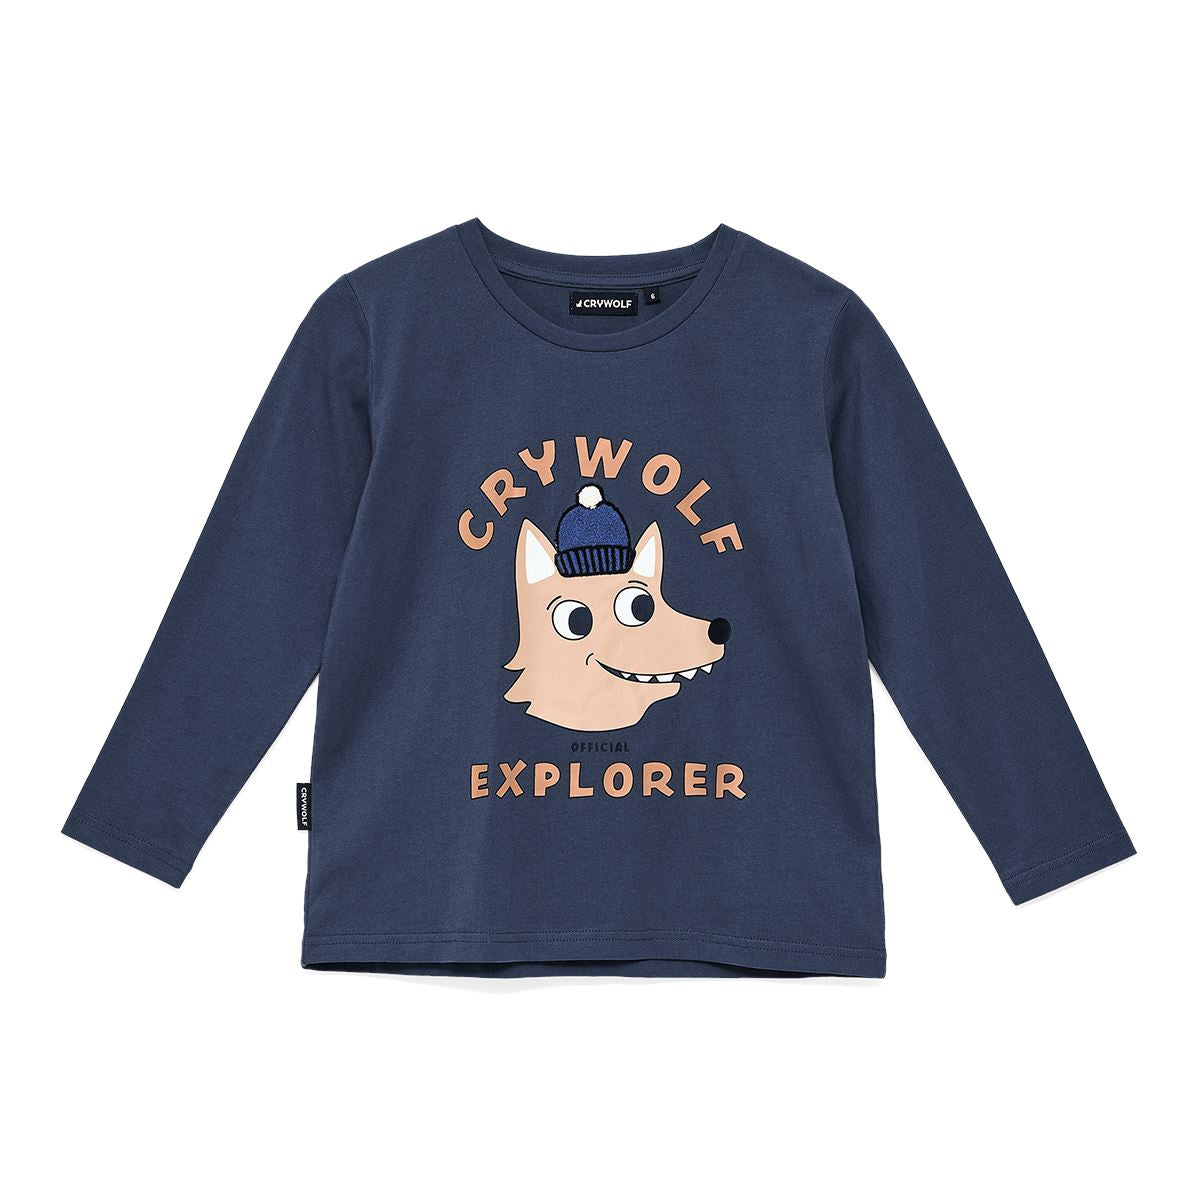 Crywolf Long Sleeve T-Shirt - Indigo Explorer Long Sleeve T-Shirt Crywolf 